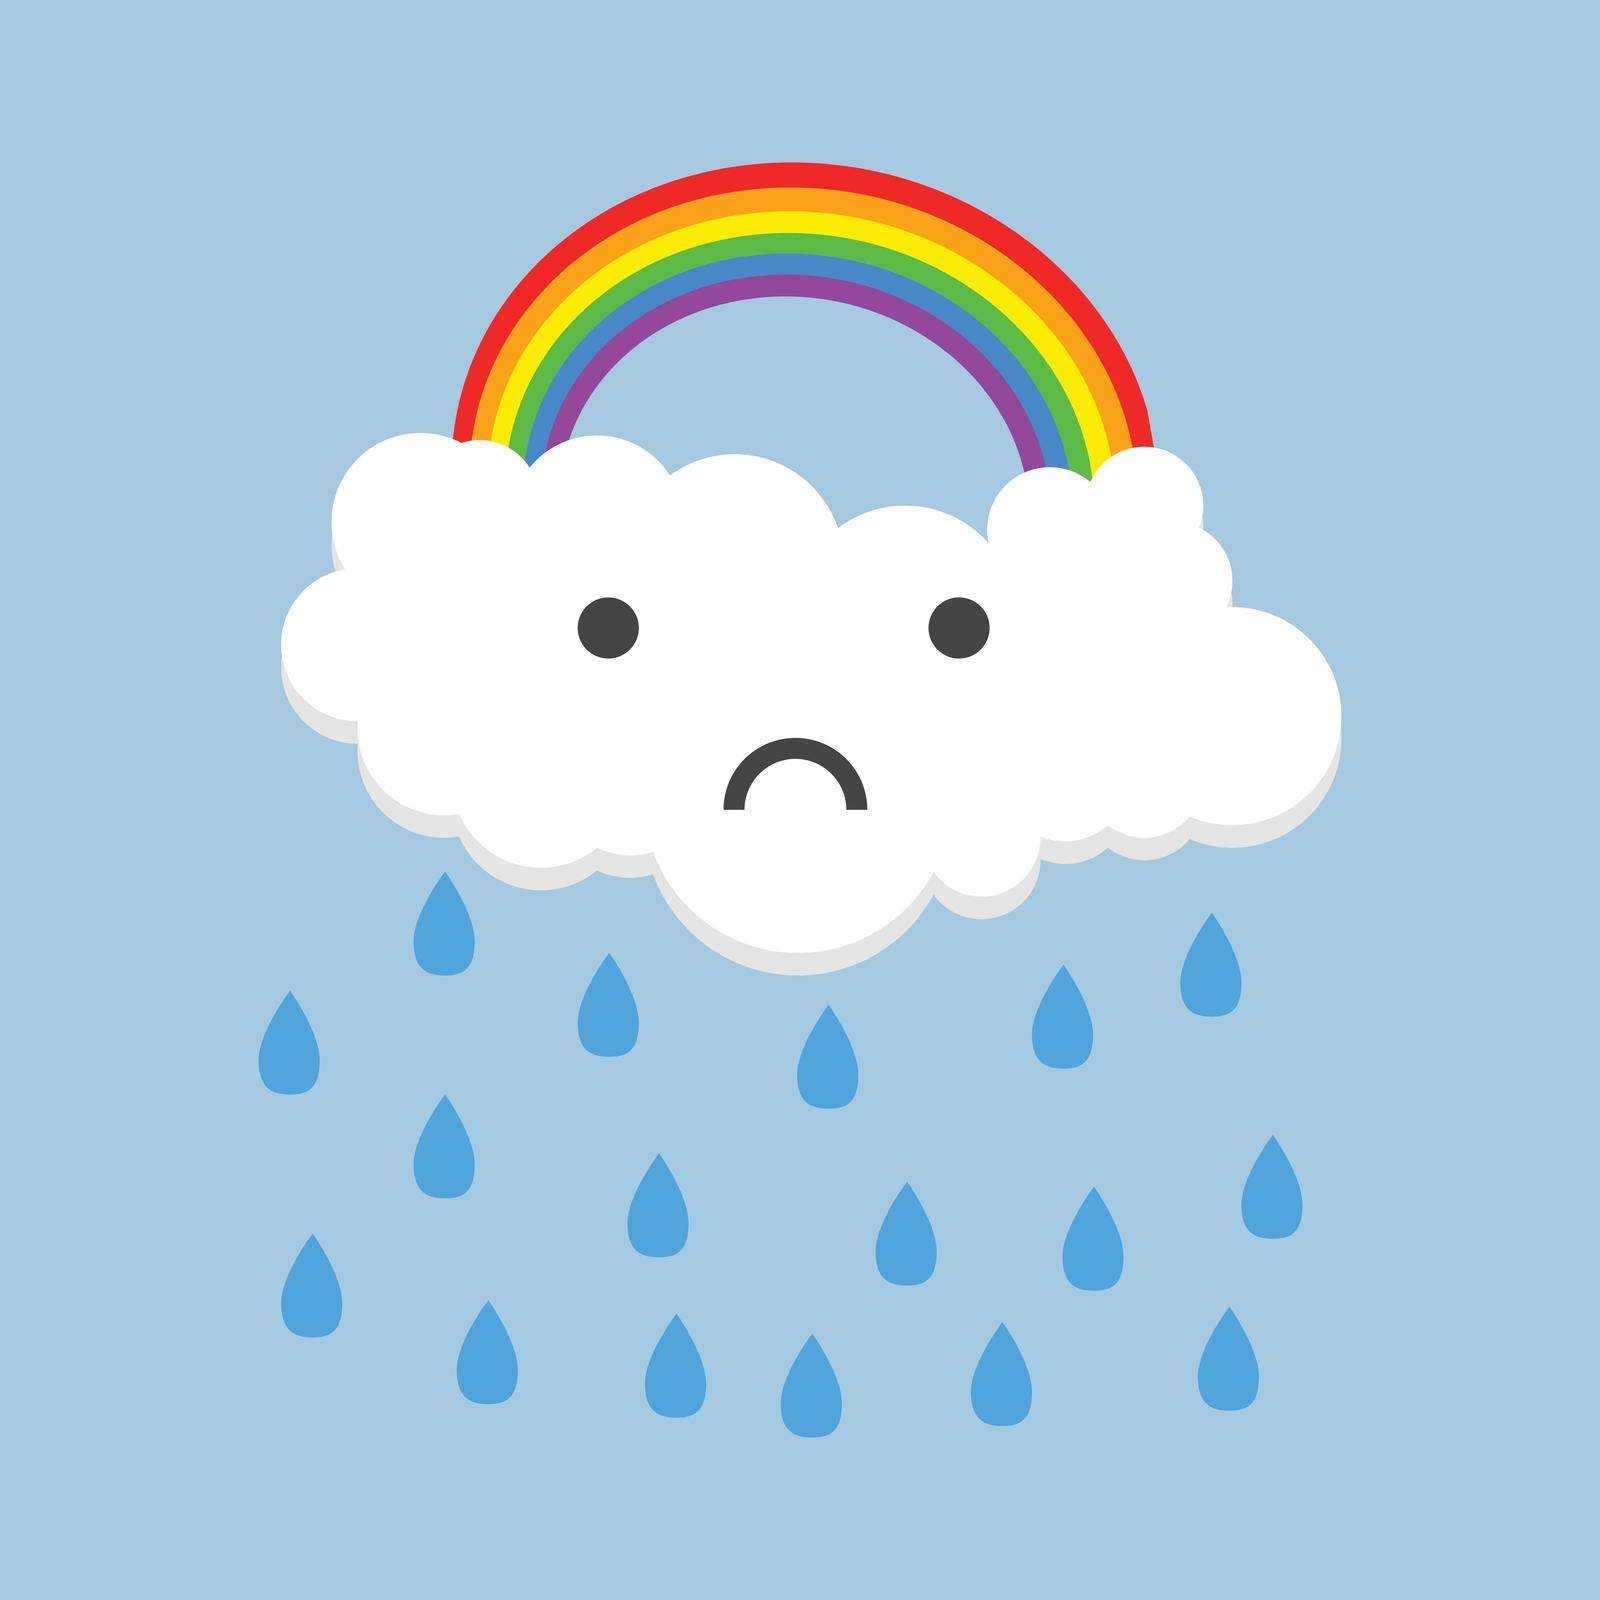 Color sad rainbow with rain. Vector illustration